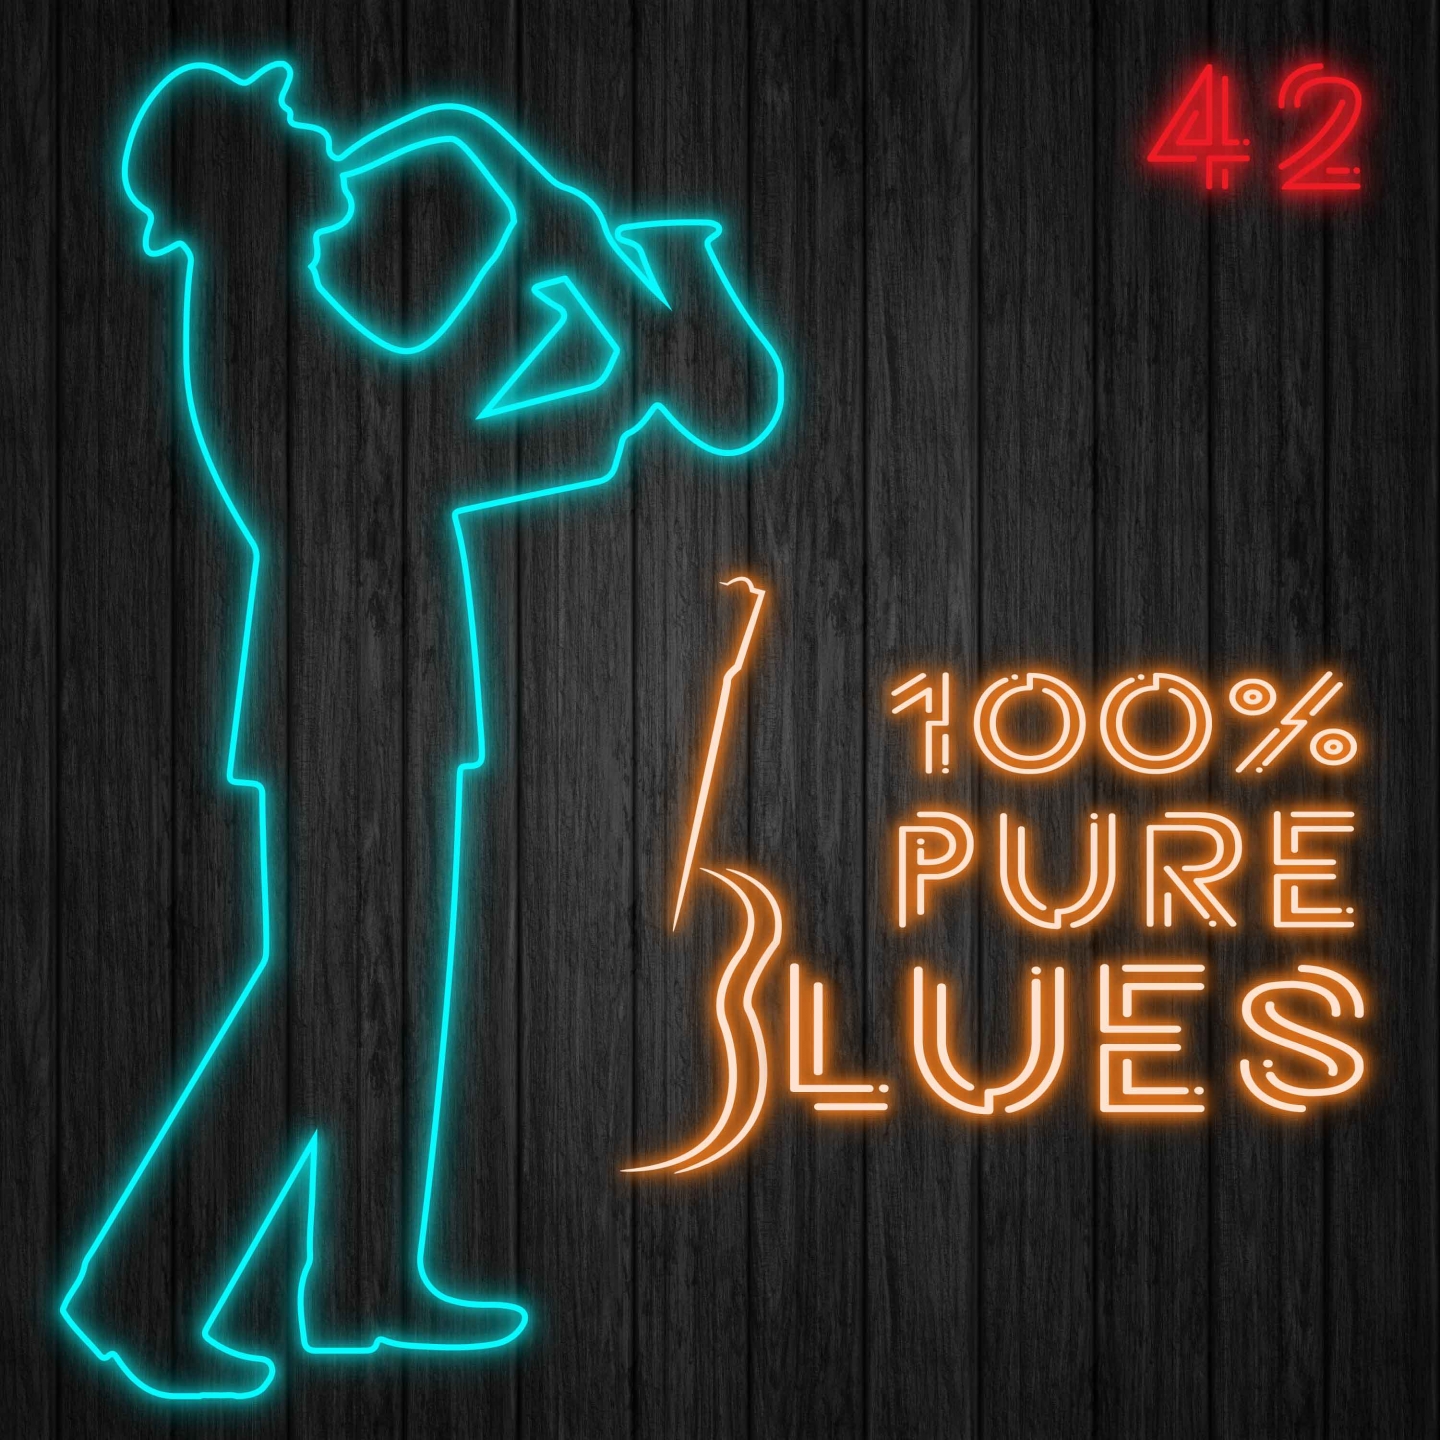 100% Pure Blues / 42